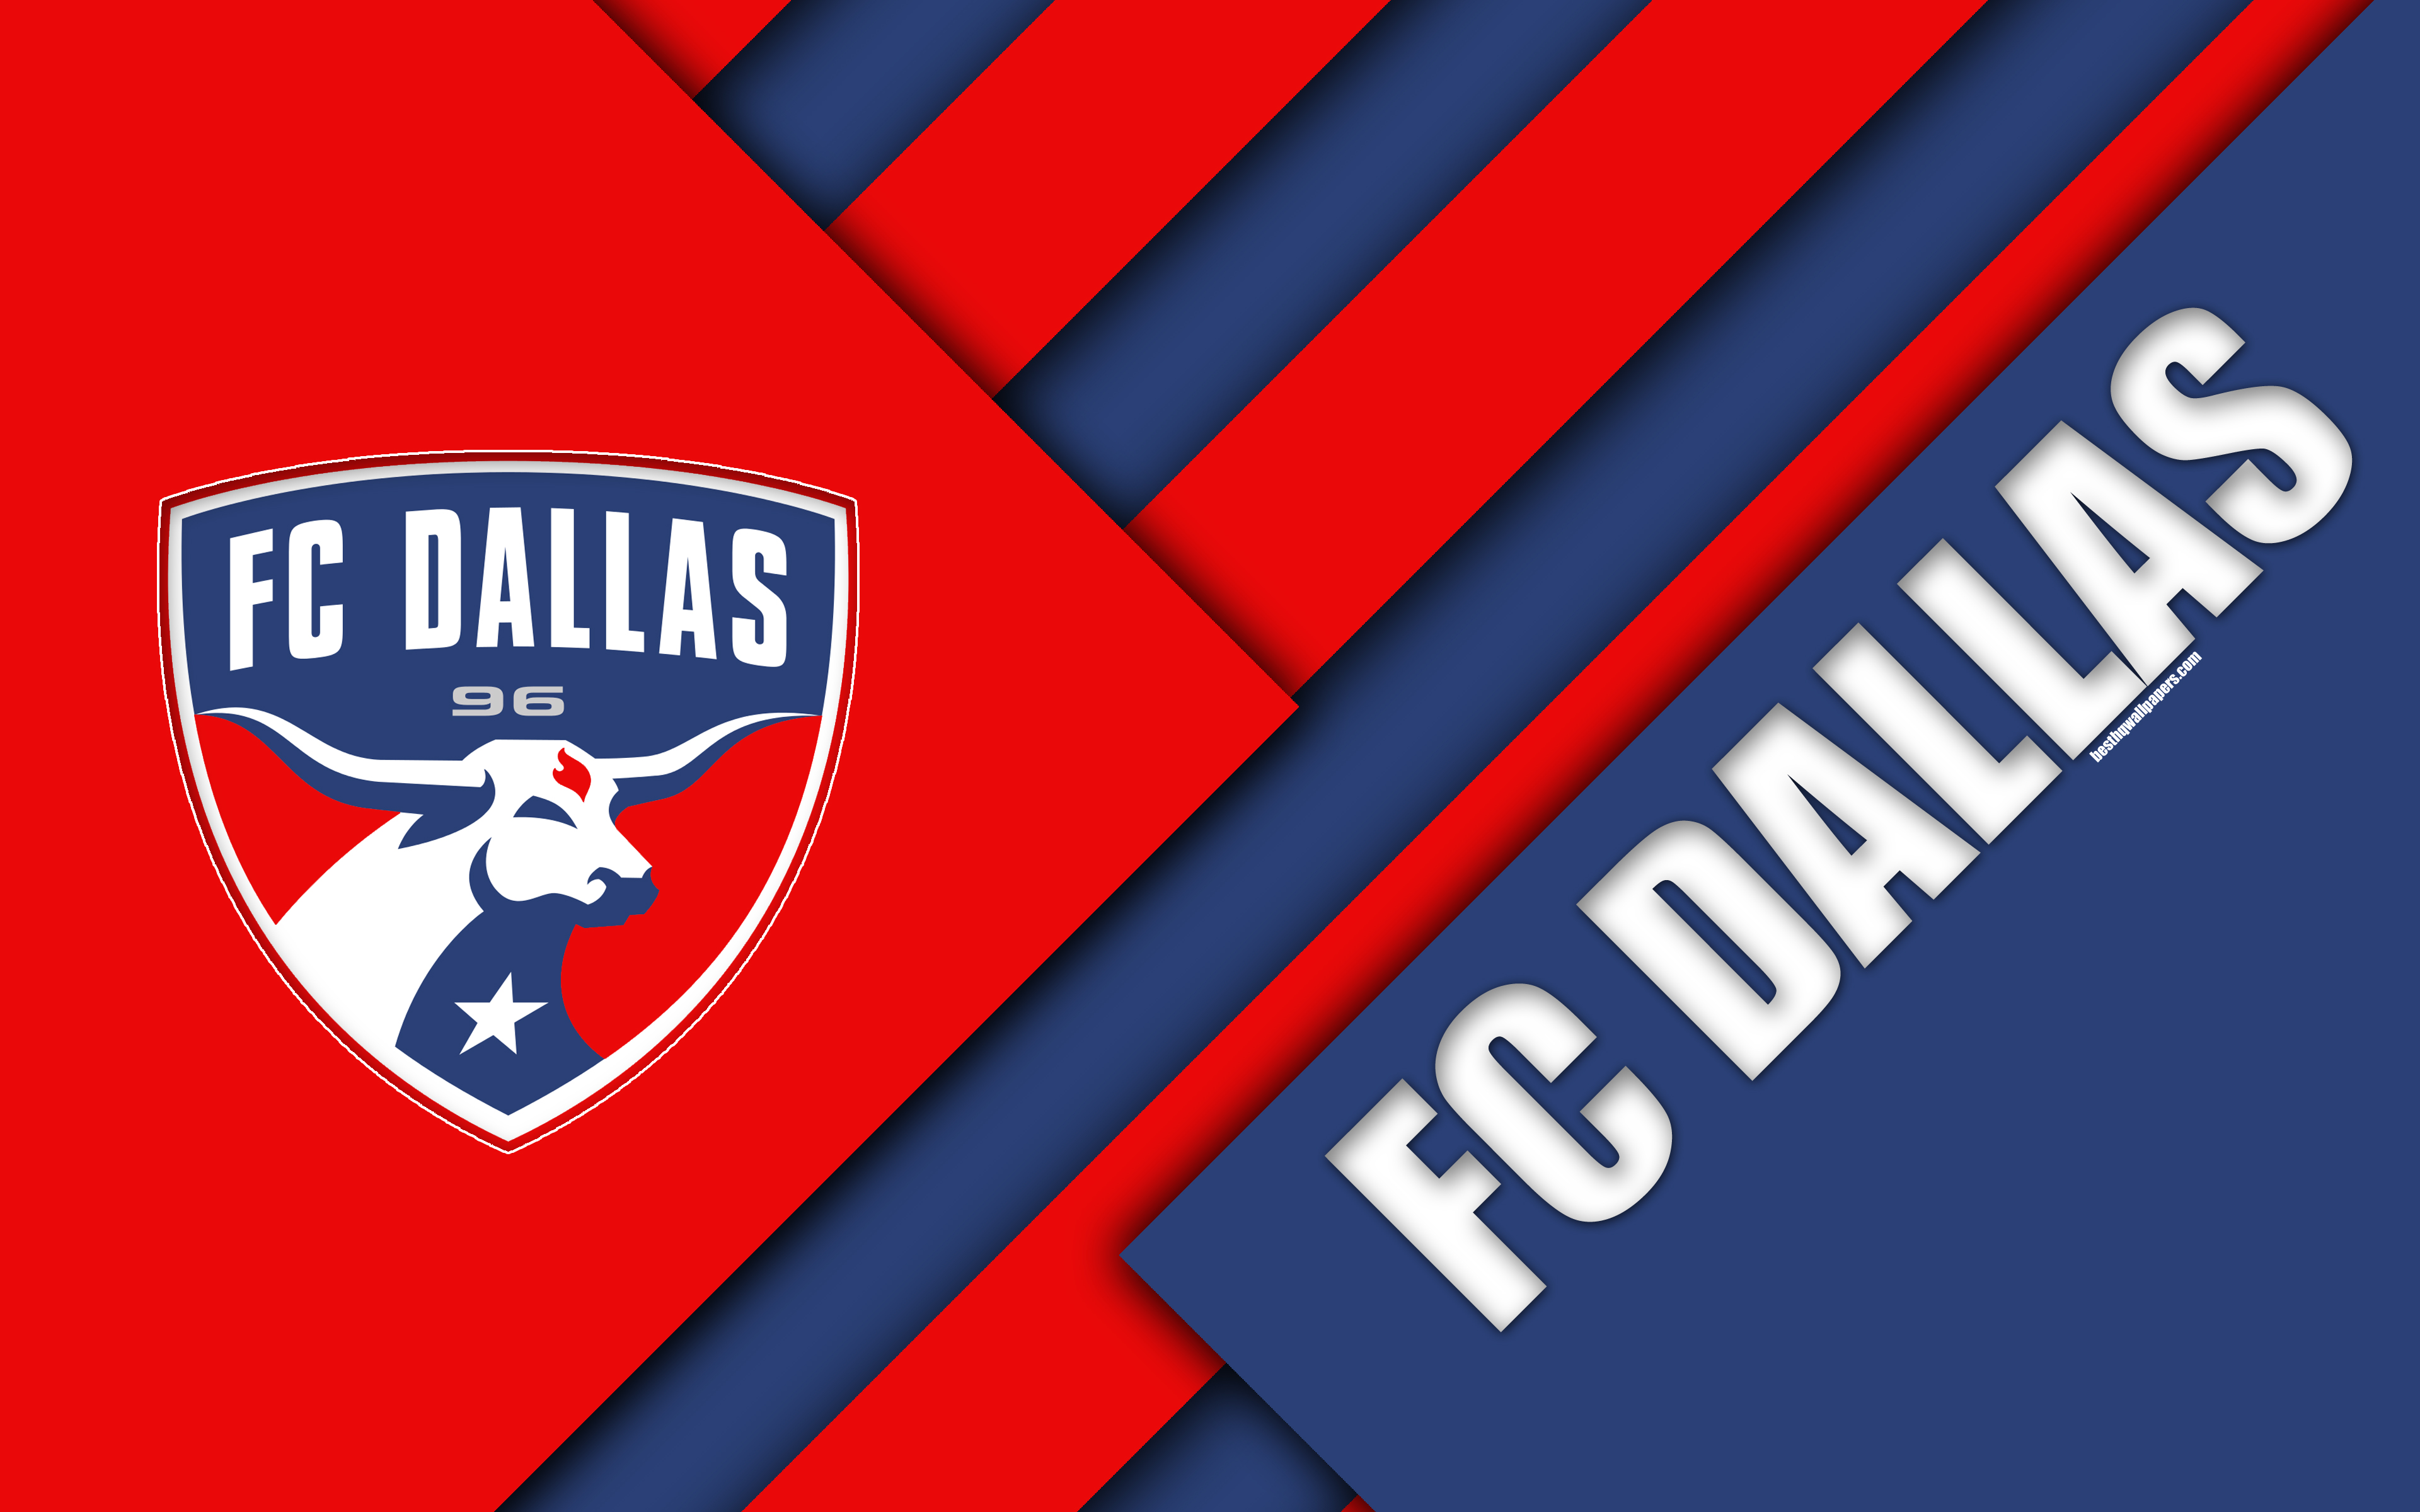 FC Dallas wallpaper by henrichess  Download on ZEDGE  8f6f